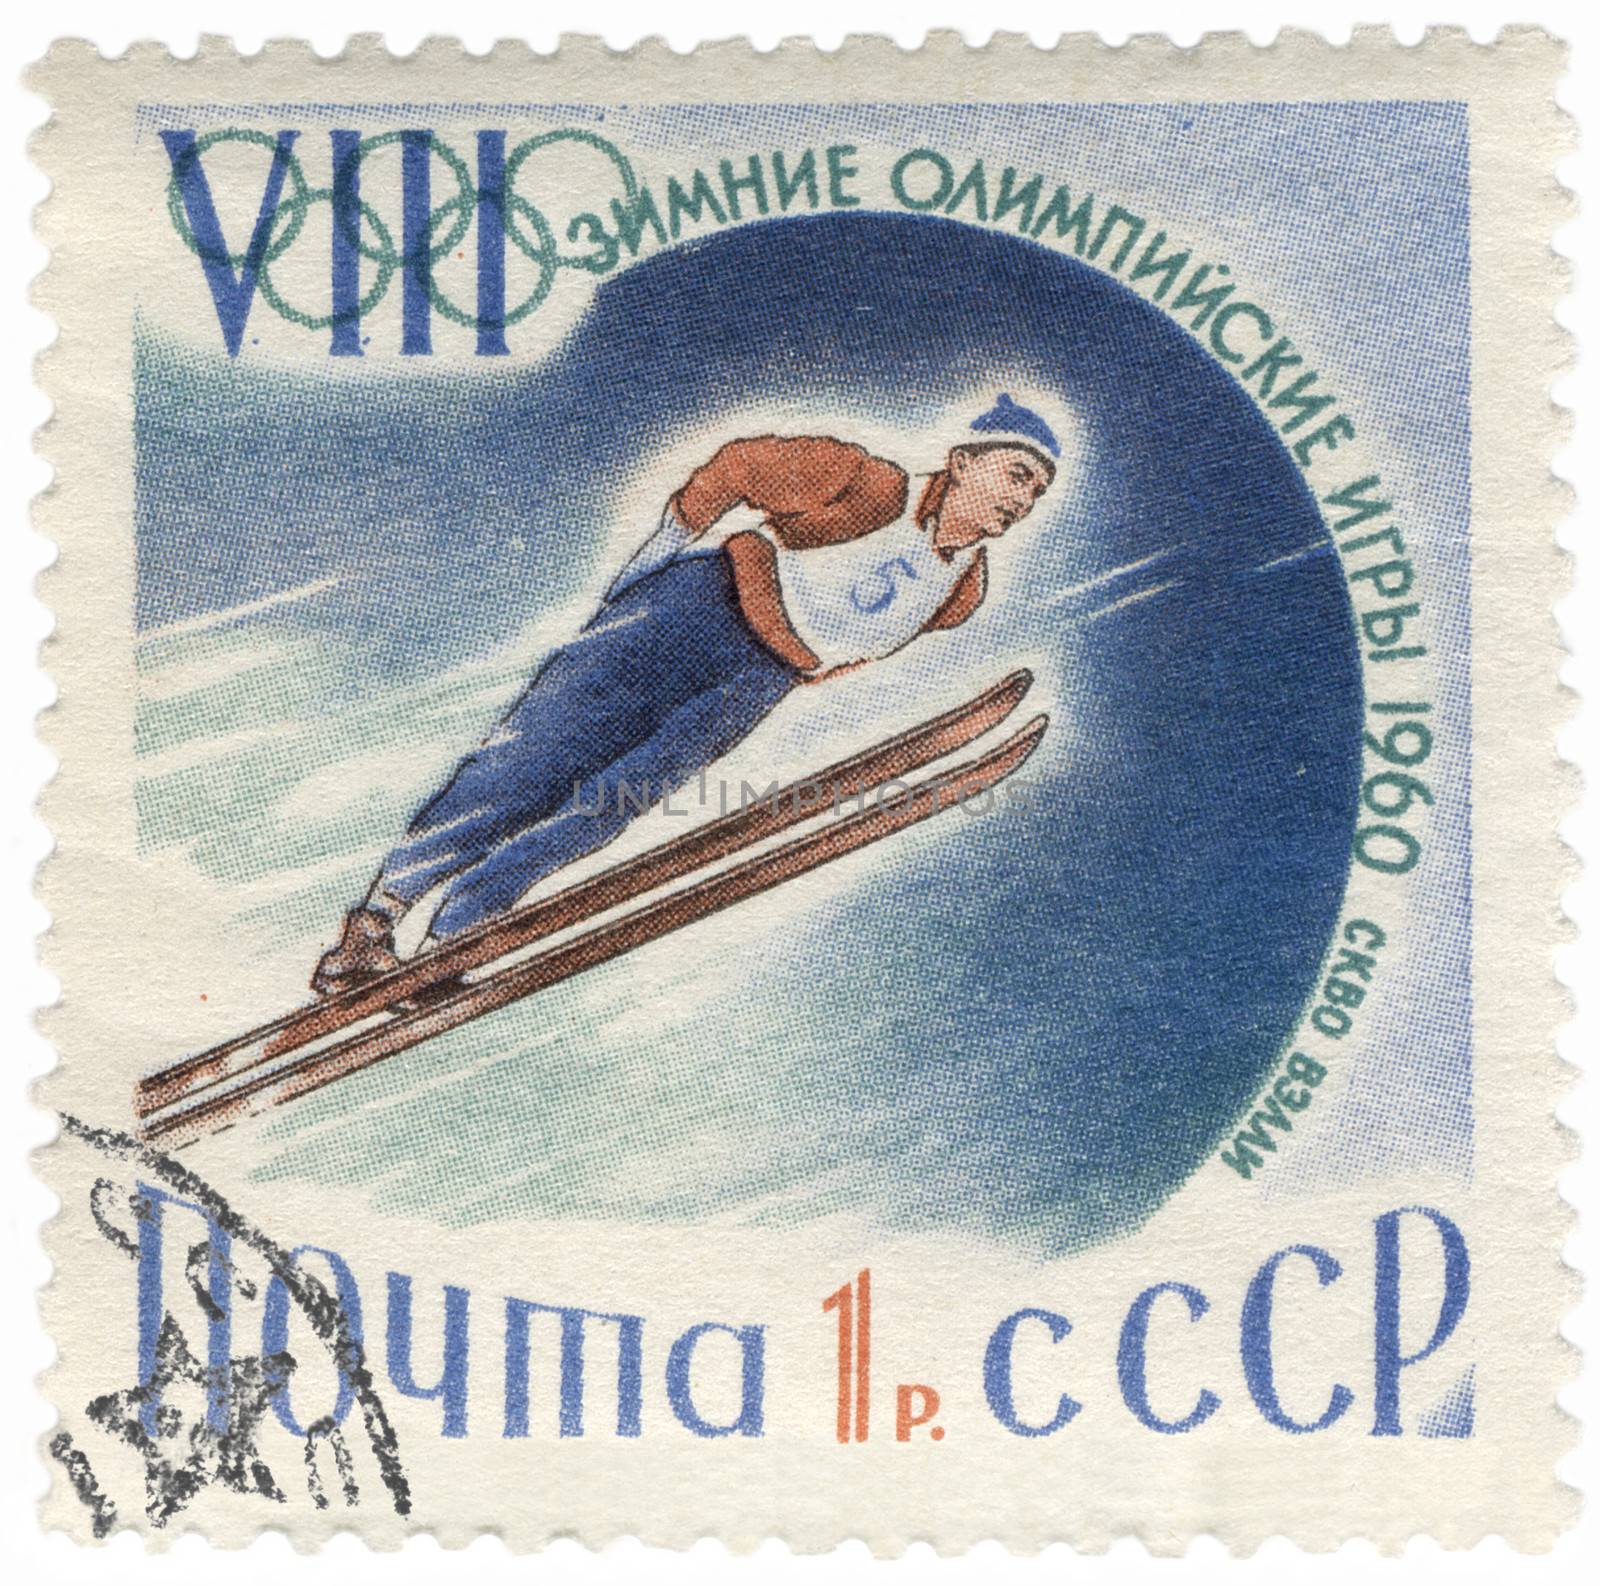 Ski jumper on post stamp by wander